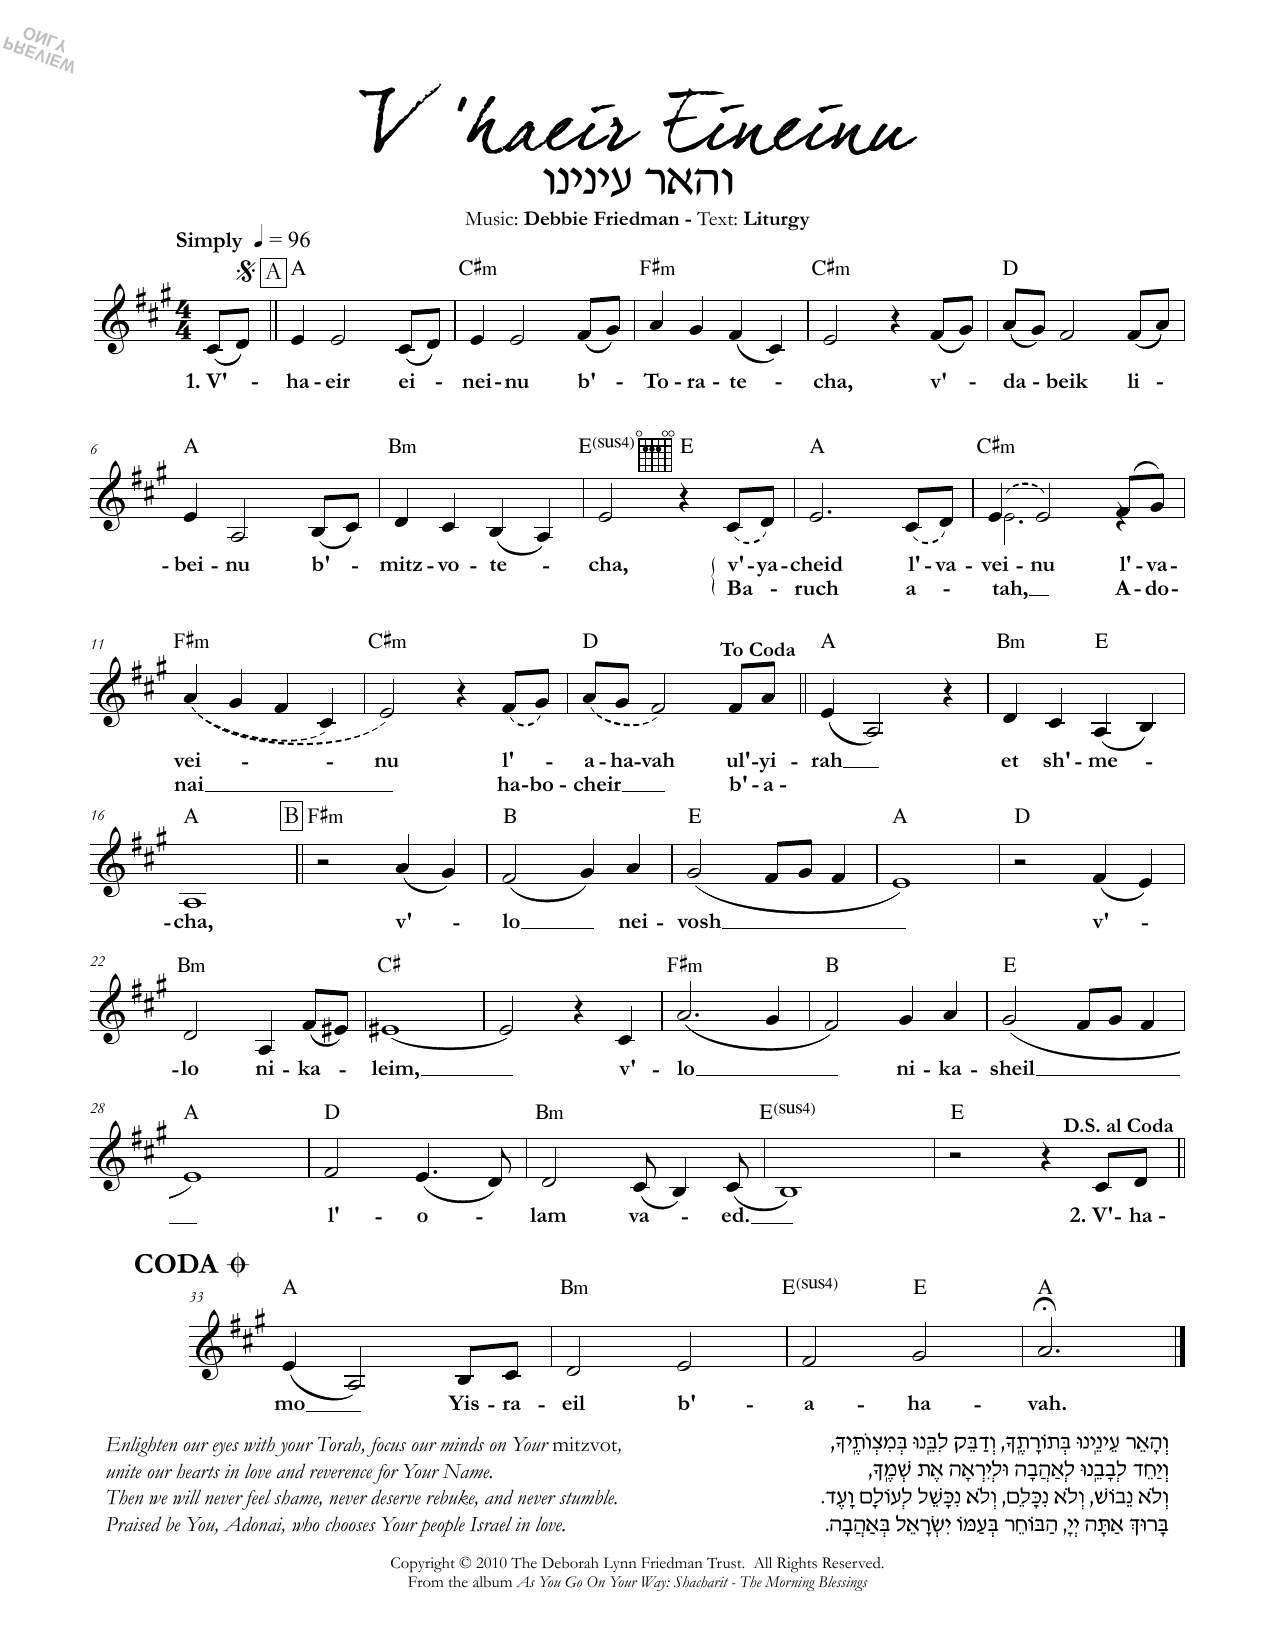 Download Debbie Friedman V'haeir Eineinu Sheet Music and learn how to play Lead Sheet / Fake Book PDF digital score in minutes